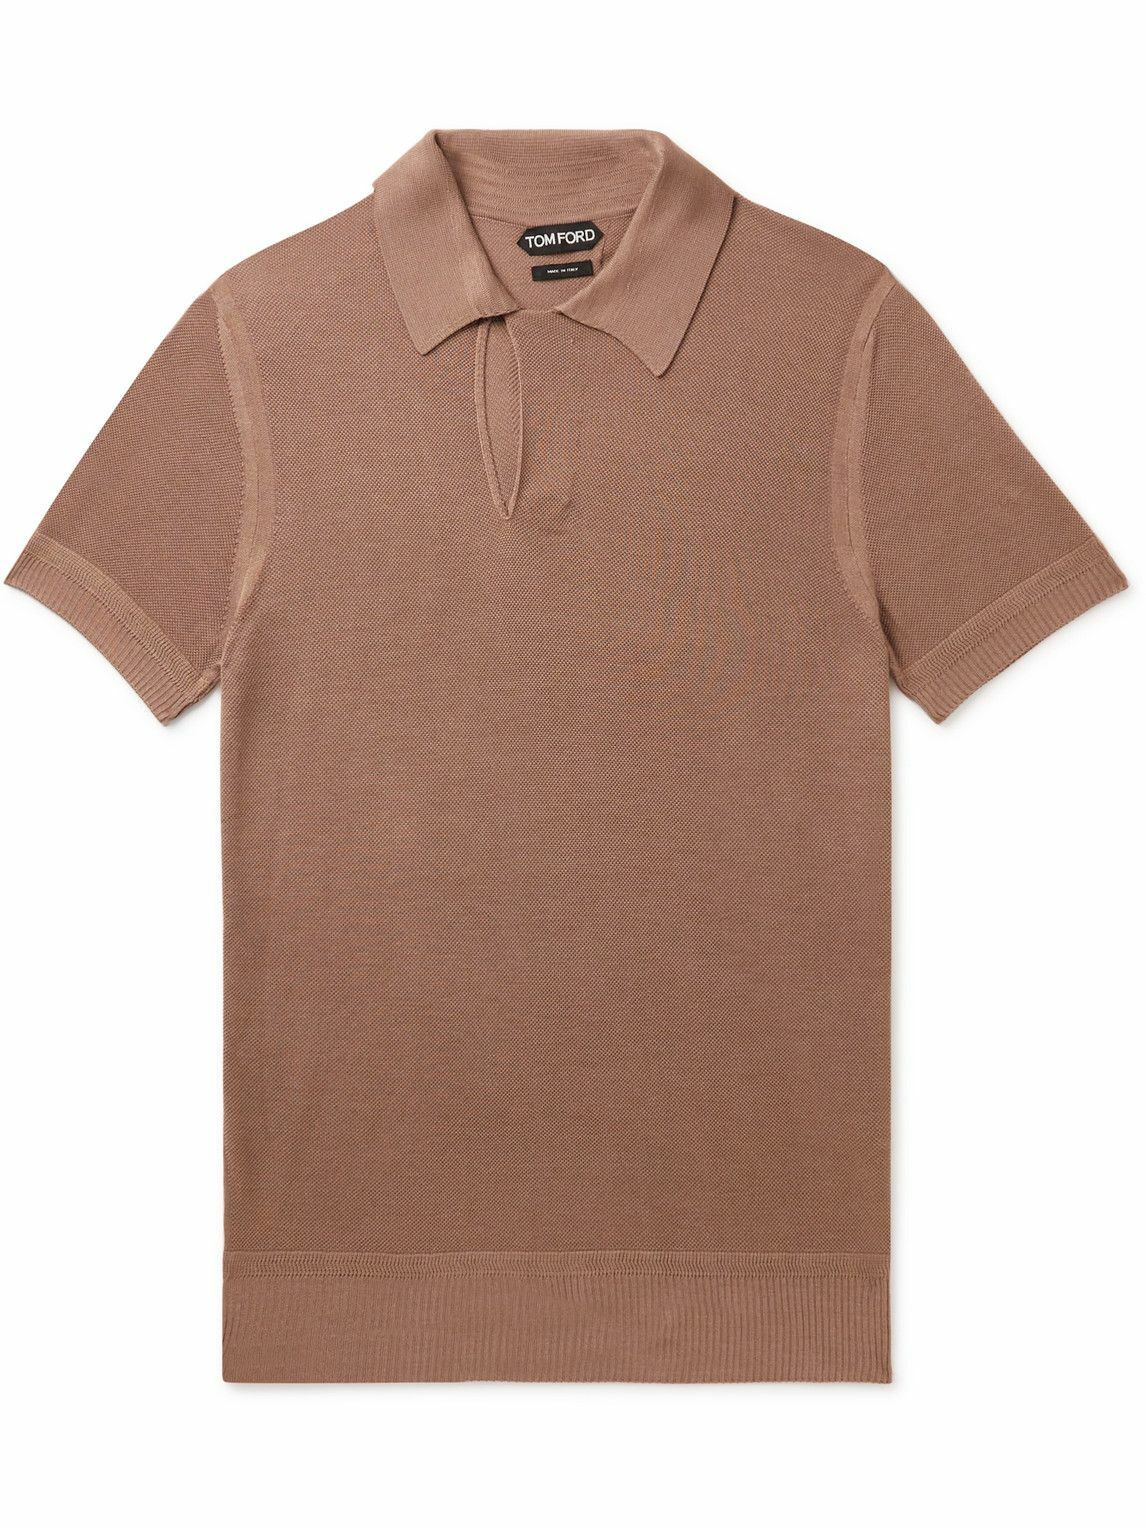 TOM FORD - Piqué Polo Shirt - Brown TOM FORD